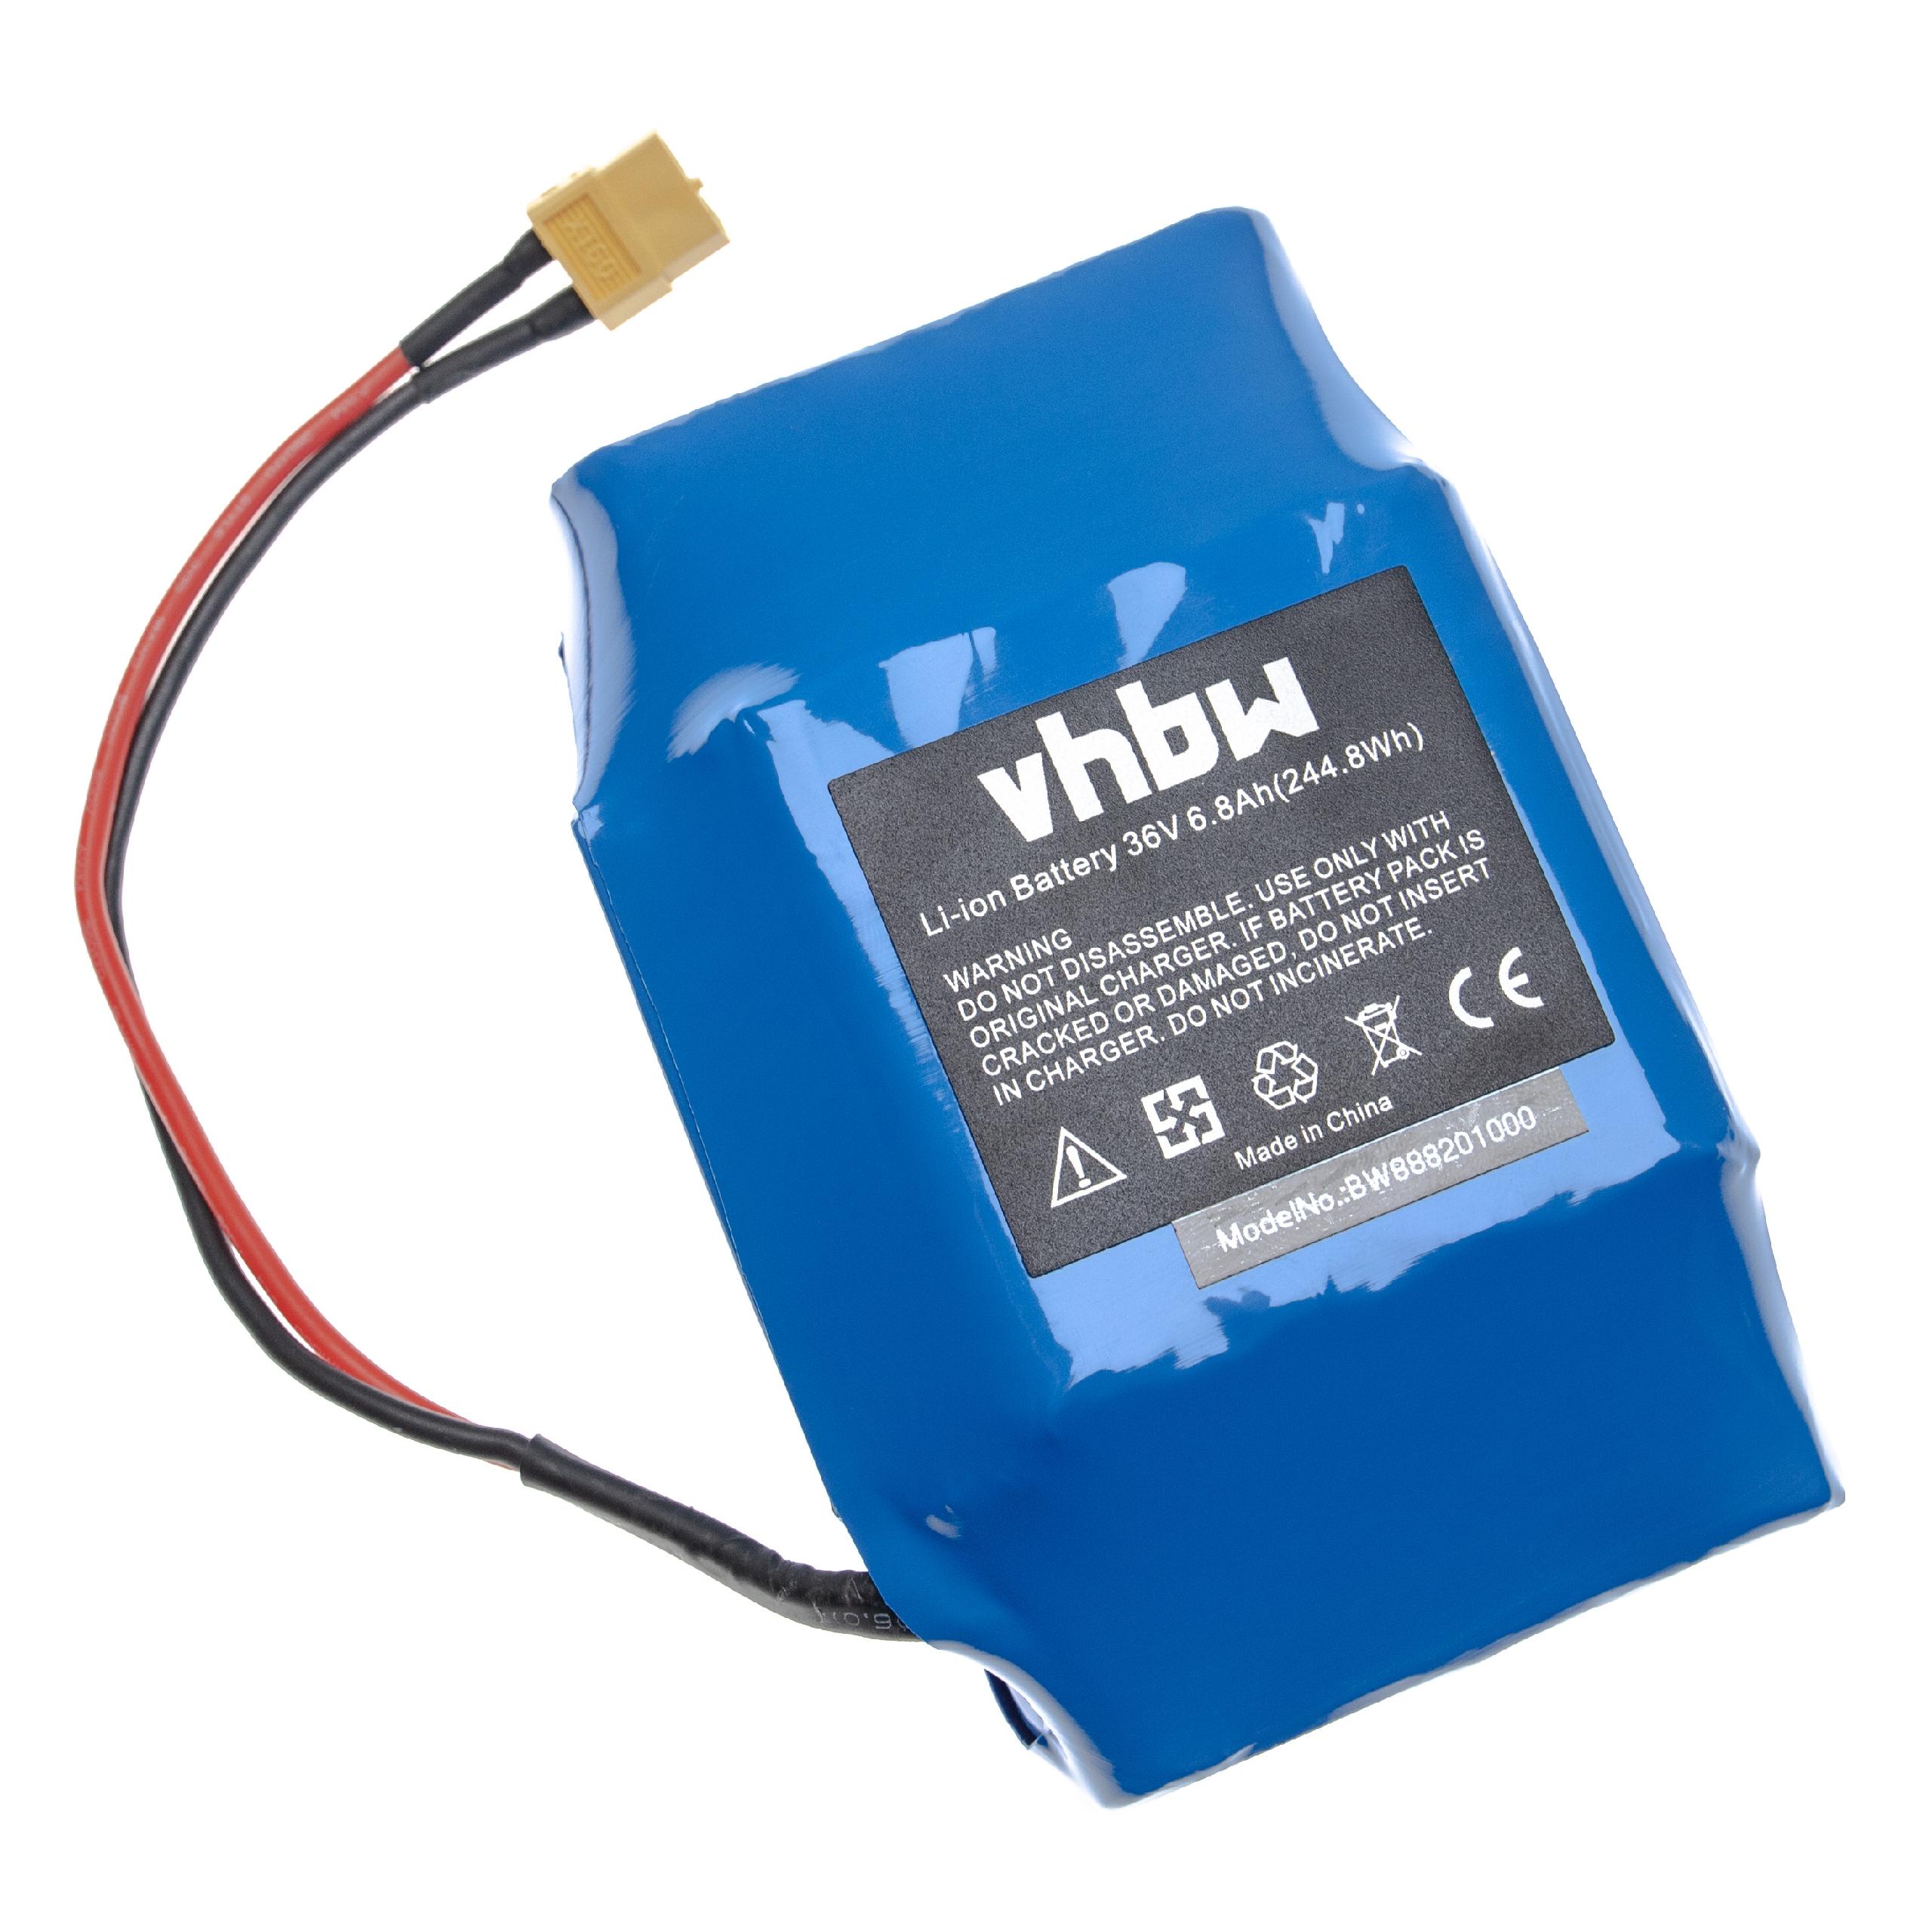 Batería reemplaza Bluewheel 10IXR19/65-2, HPK-11 para aerotabla eléctrica Bluewheel - 6800 mAh 36 V Li-Ion